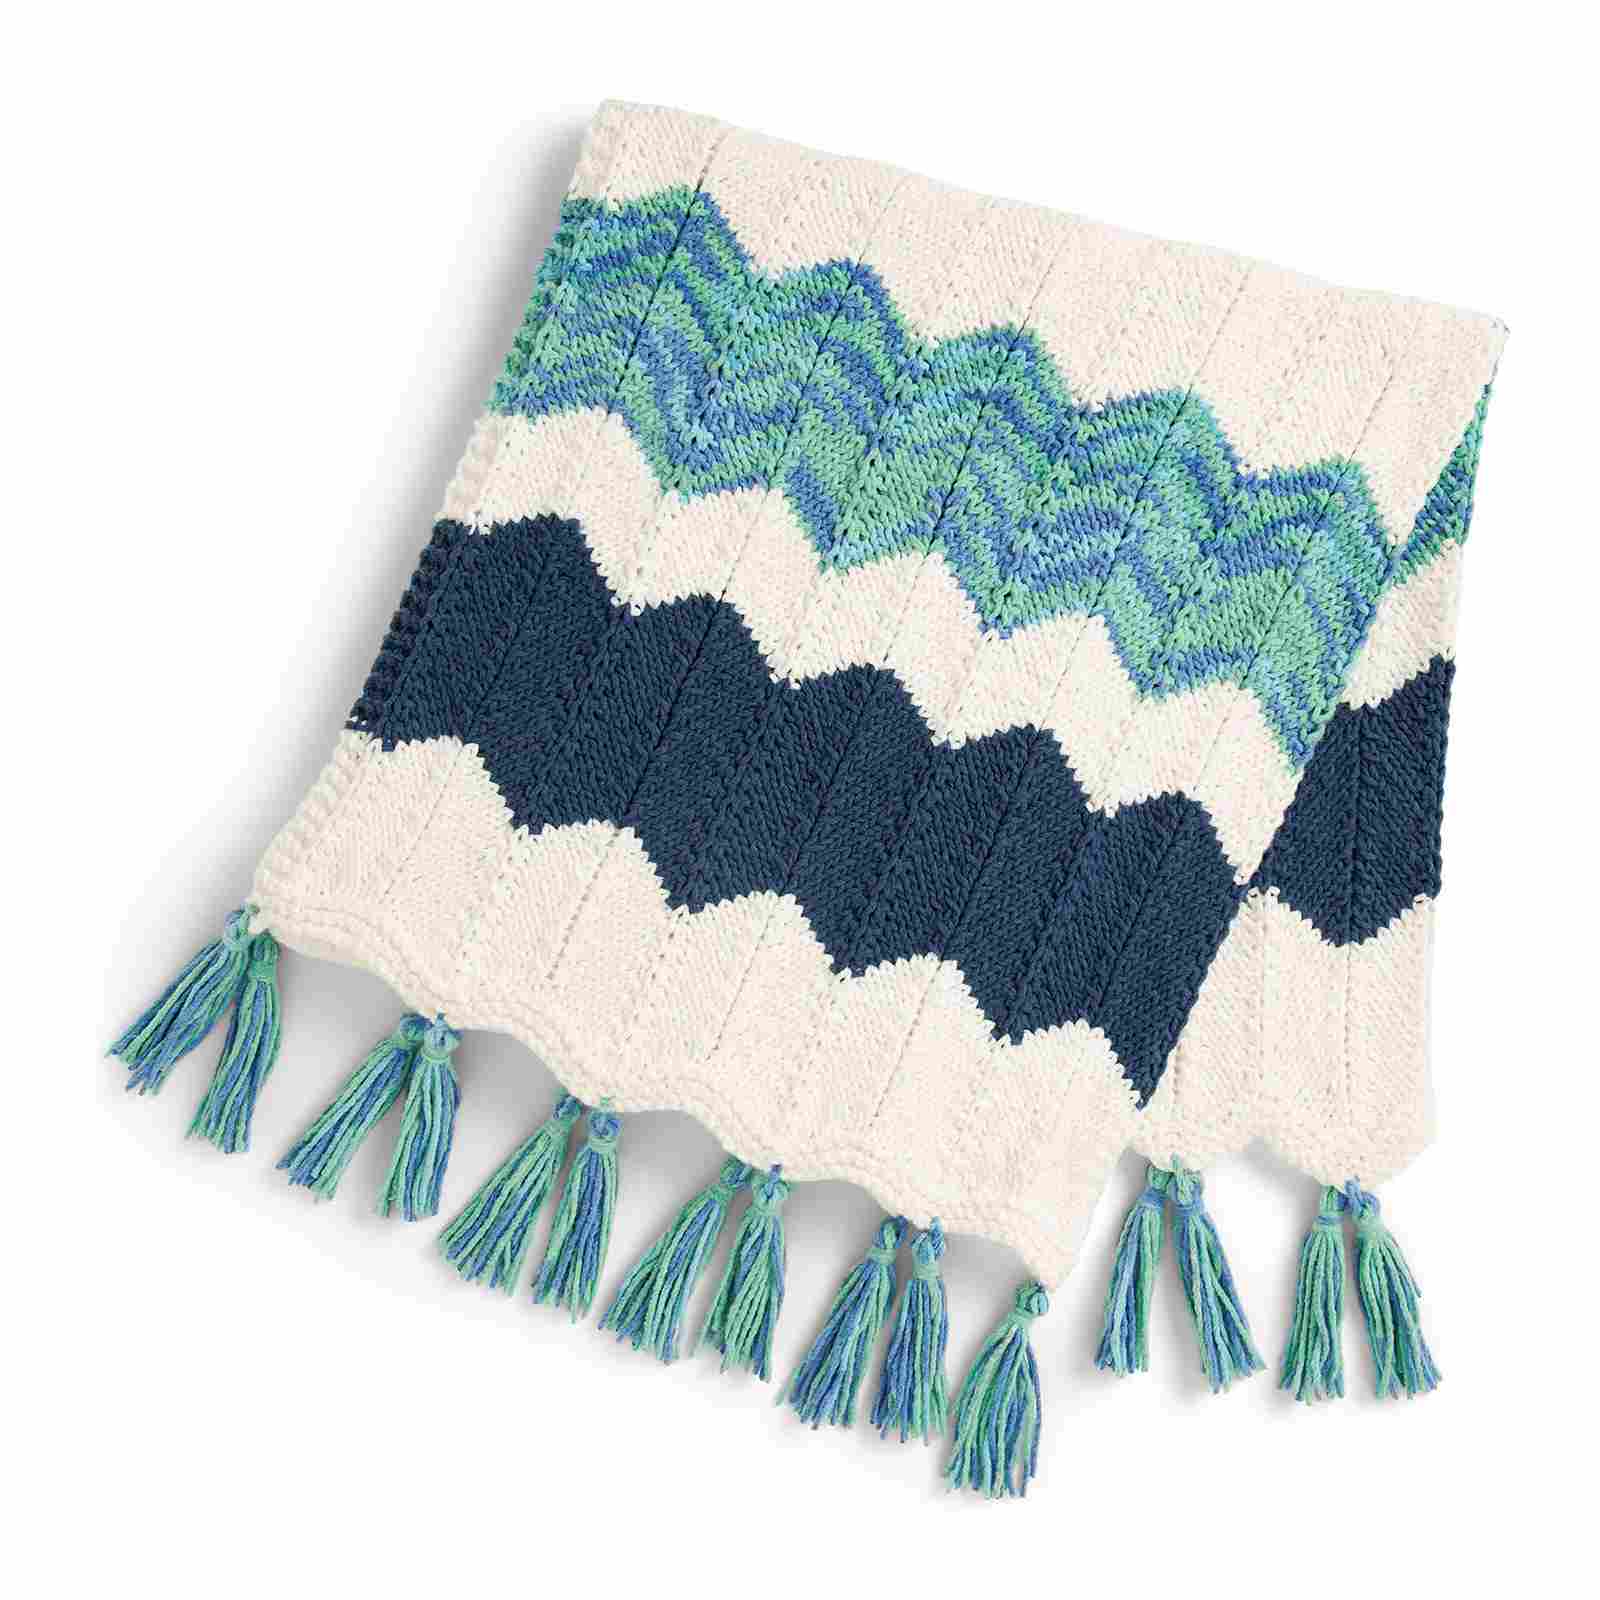 Chevron Knit Blanket - Free Knitting Pattern by Yarnspirations